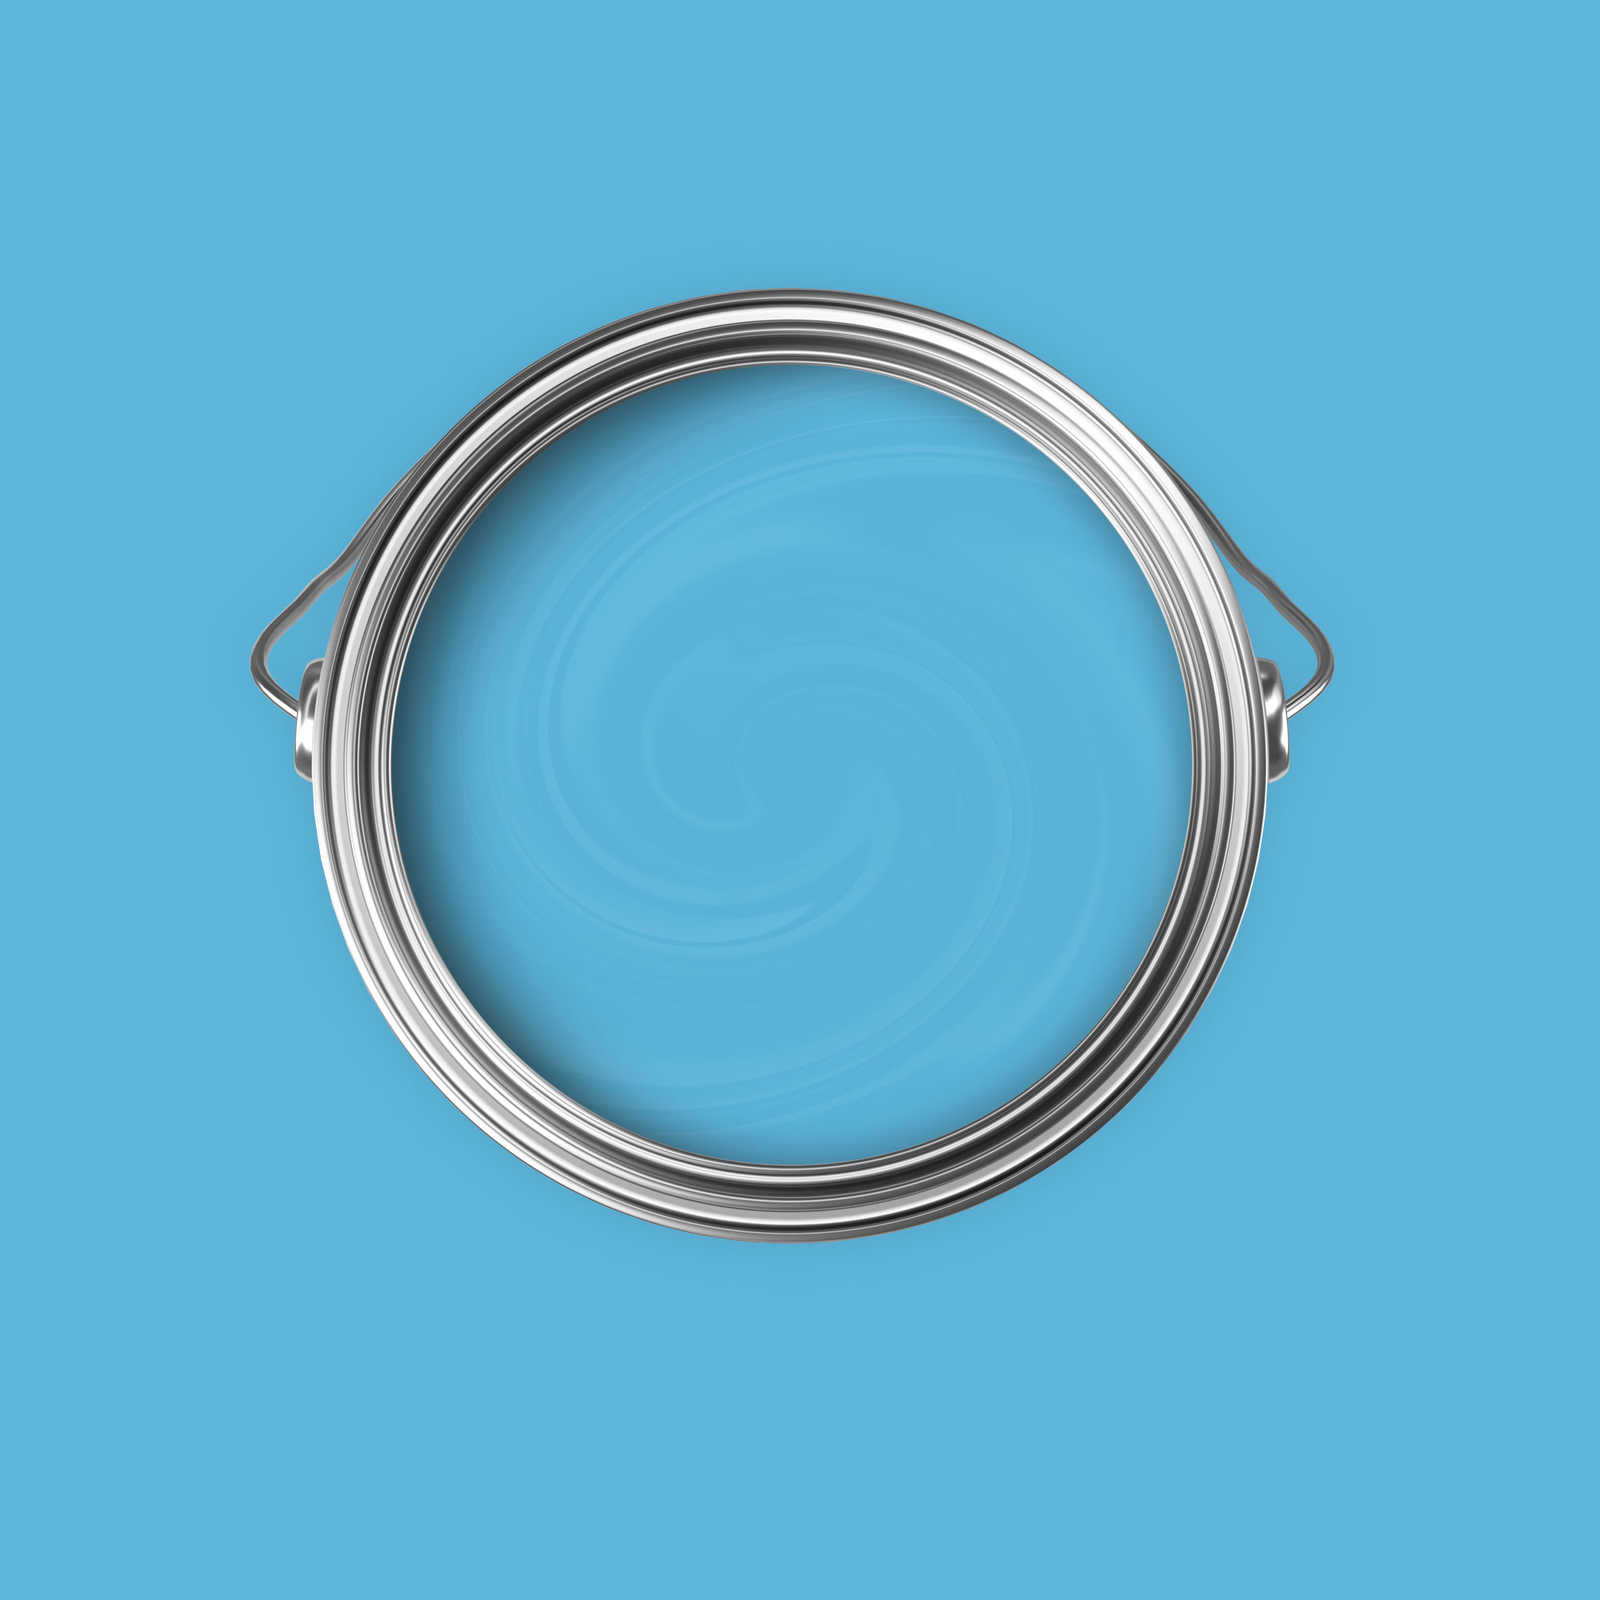             Premium Wandfarbe strahlendes Eisblau »Blissful Blue« NW302 – 5 Liter
        